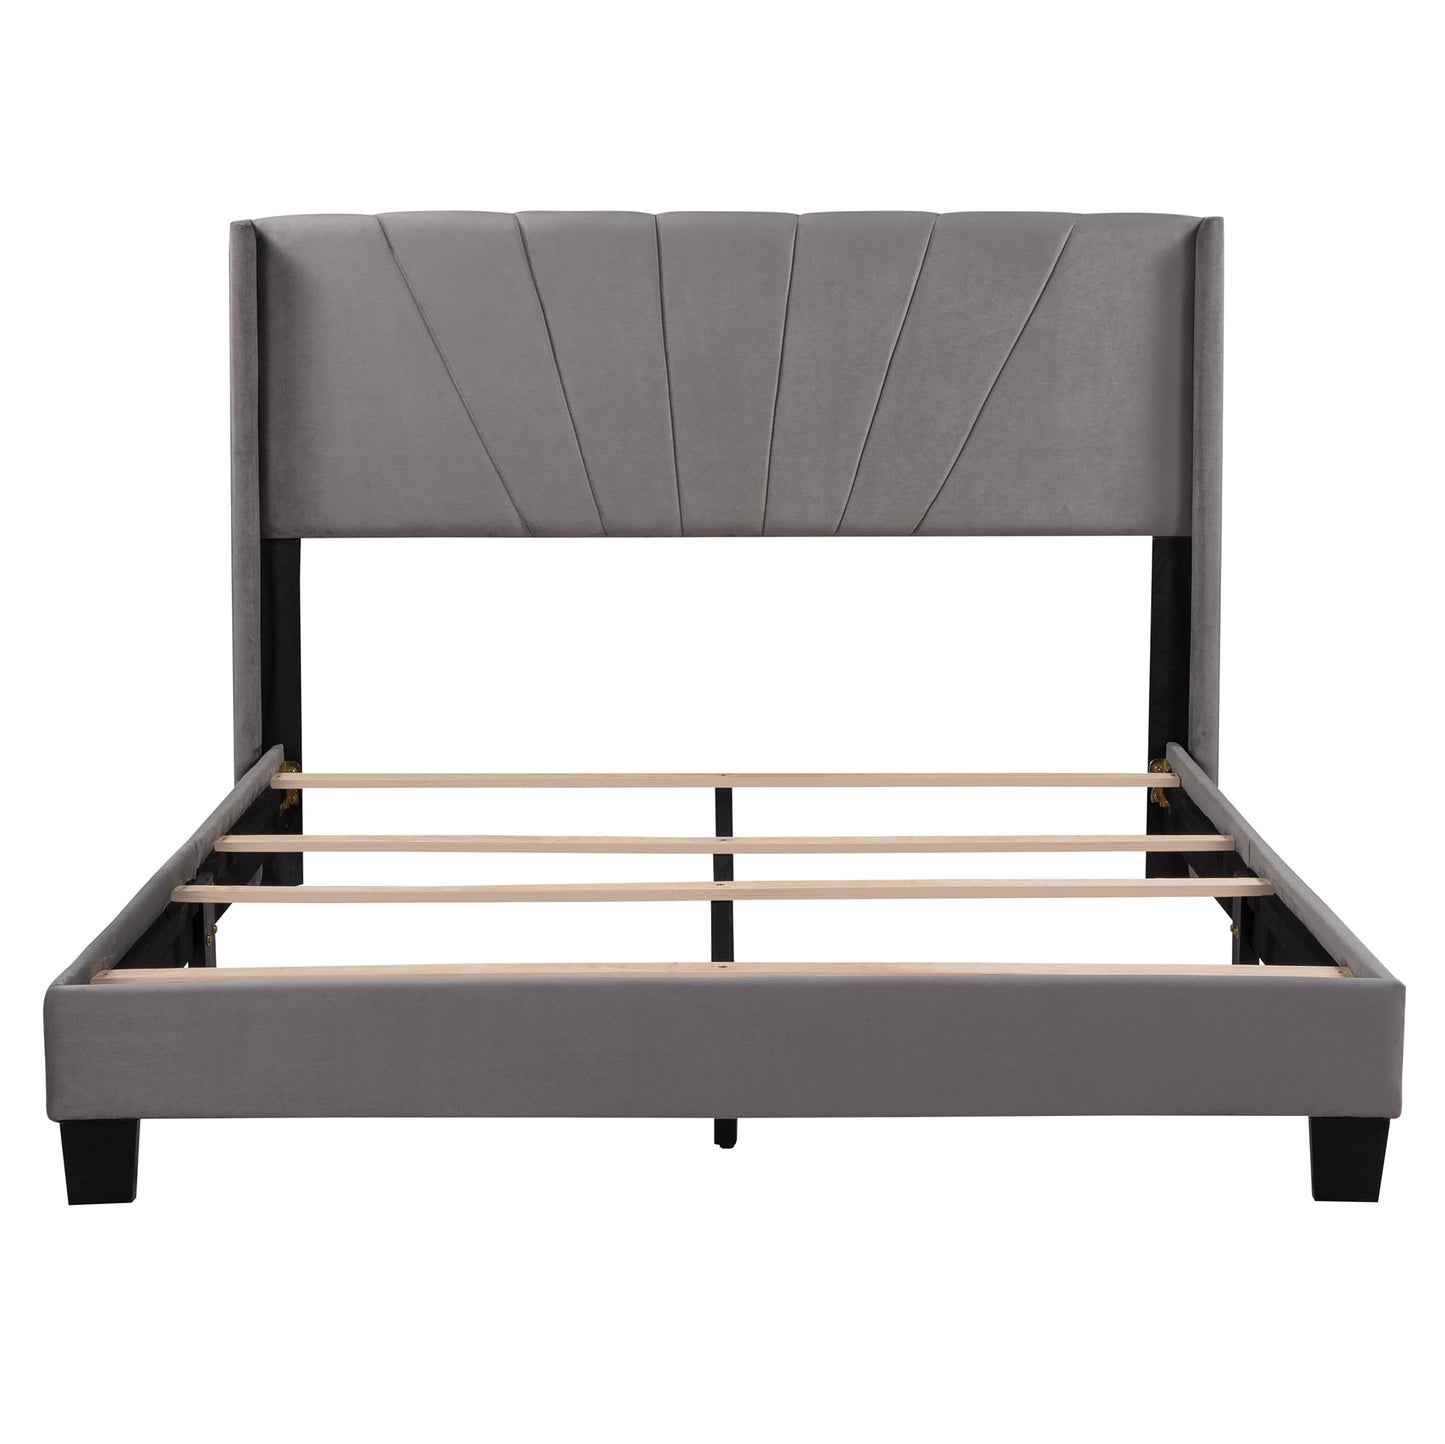 queen size velvet upholstered platform bed, grey